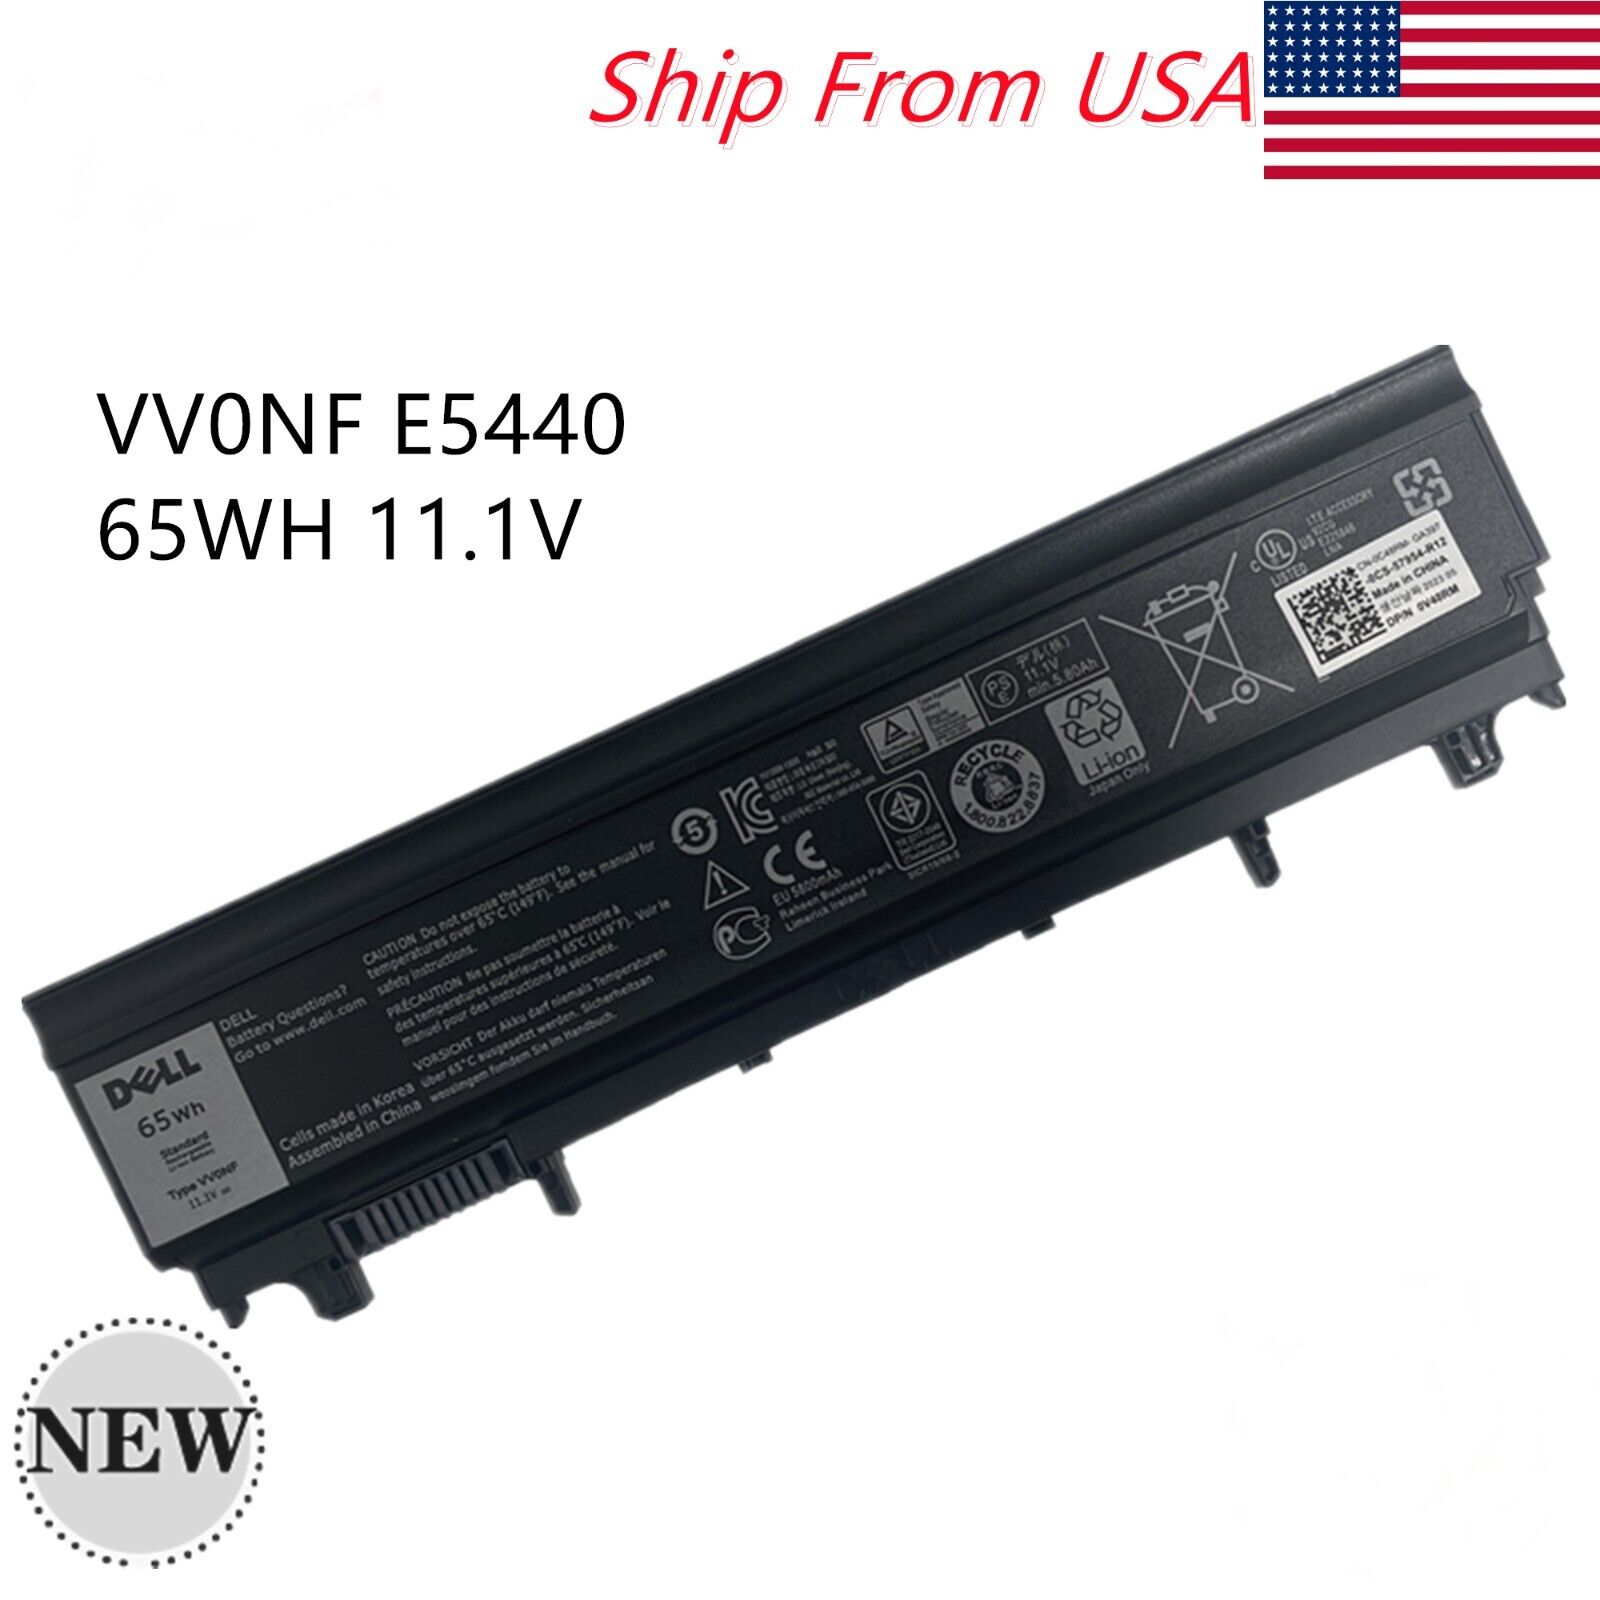 OEM 65WH 11.1V VV0NF Battery For Dell Latitude E5540 E5440 Series CXF66 F49WX US